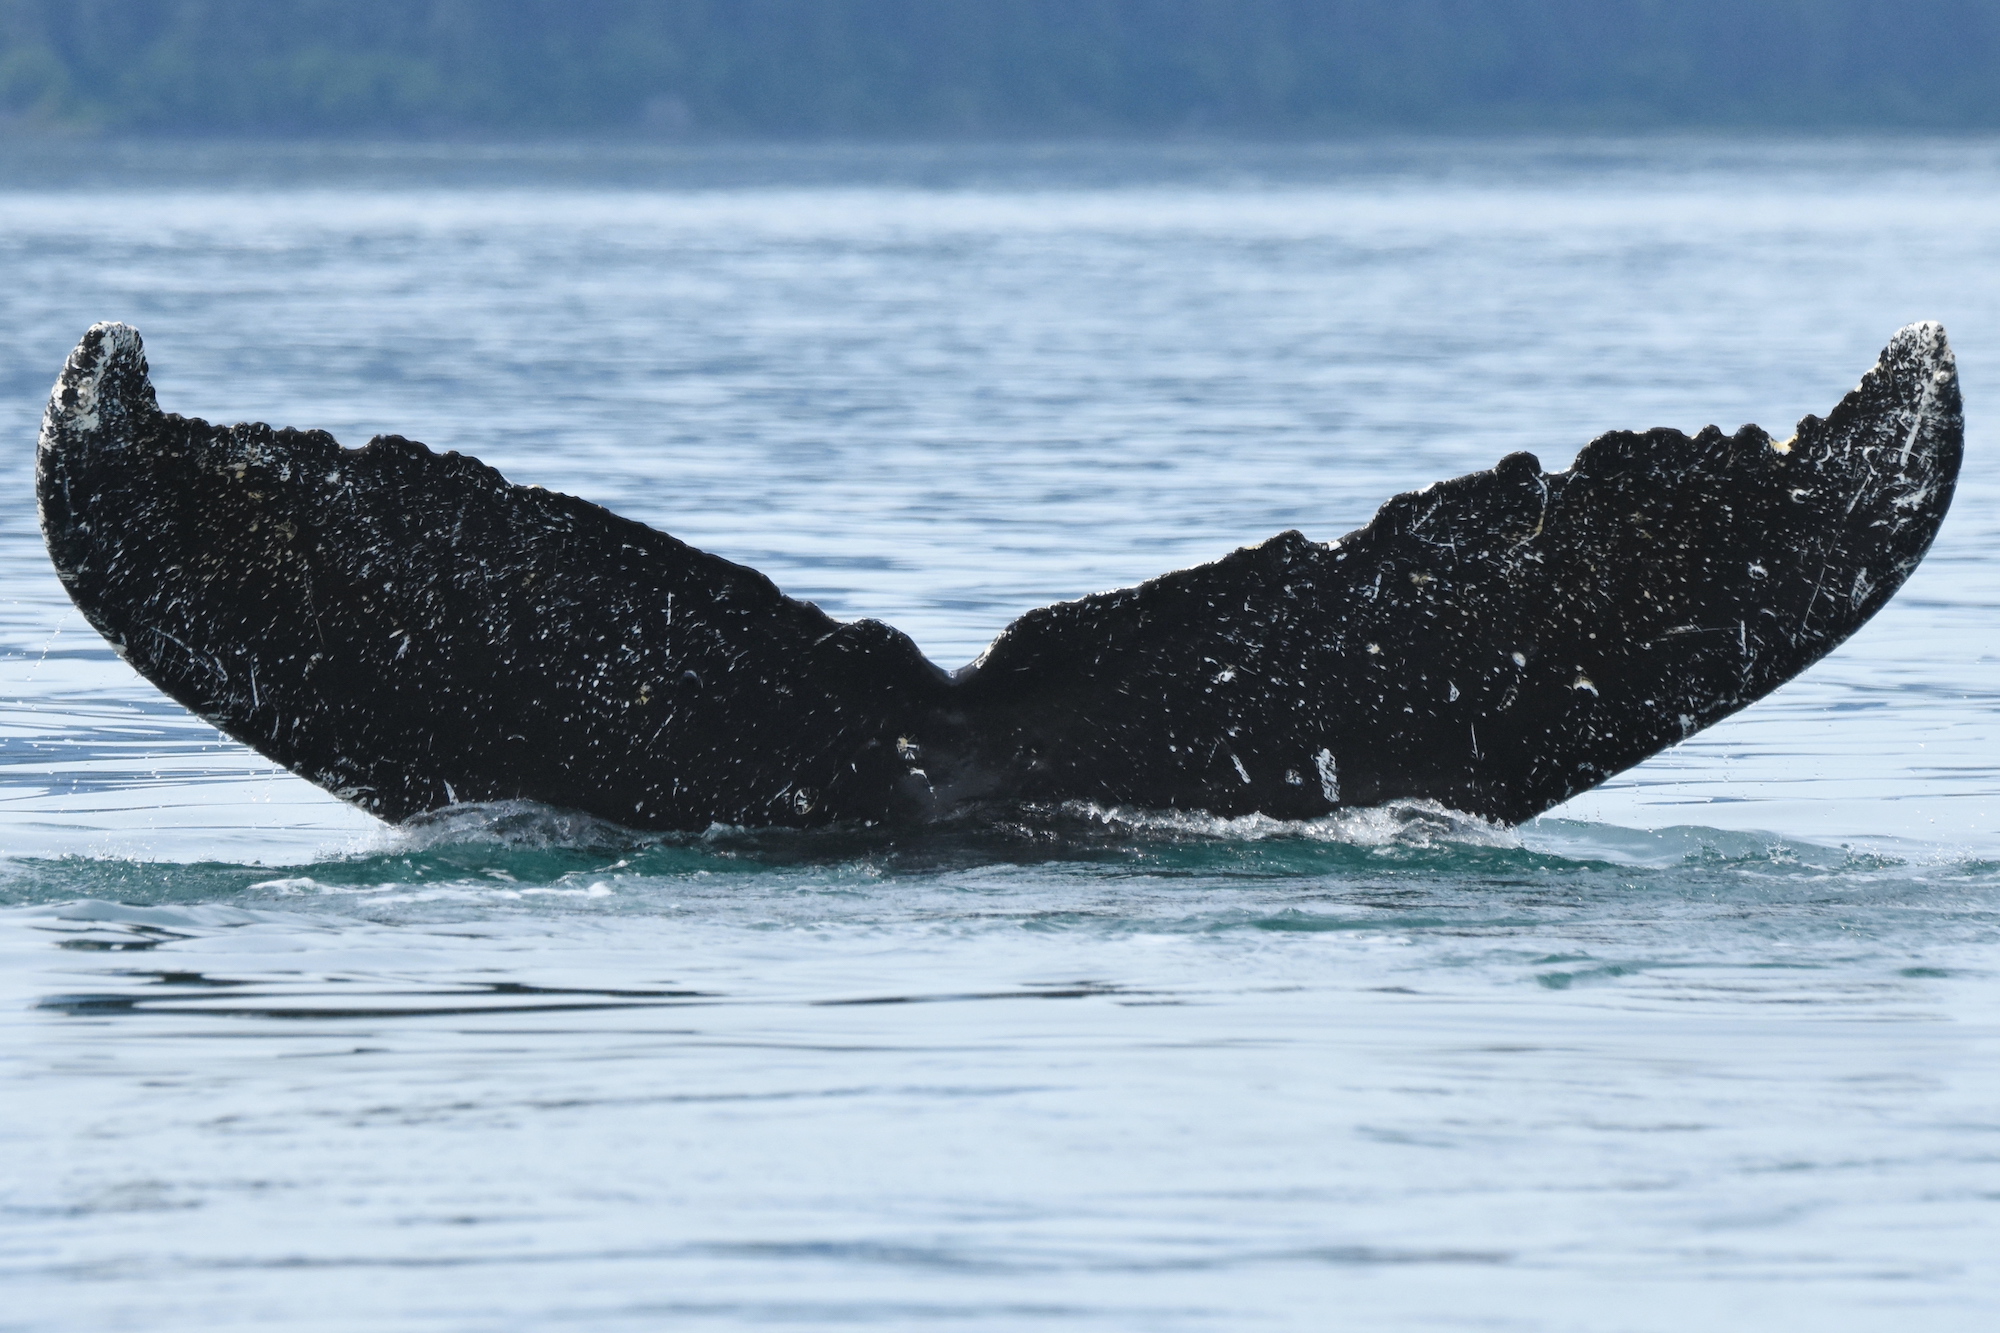 A whale fluke breaks the surface of the ocean.